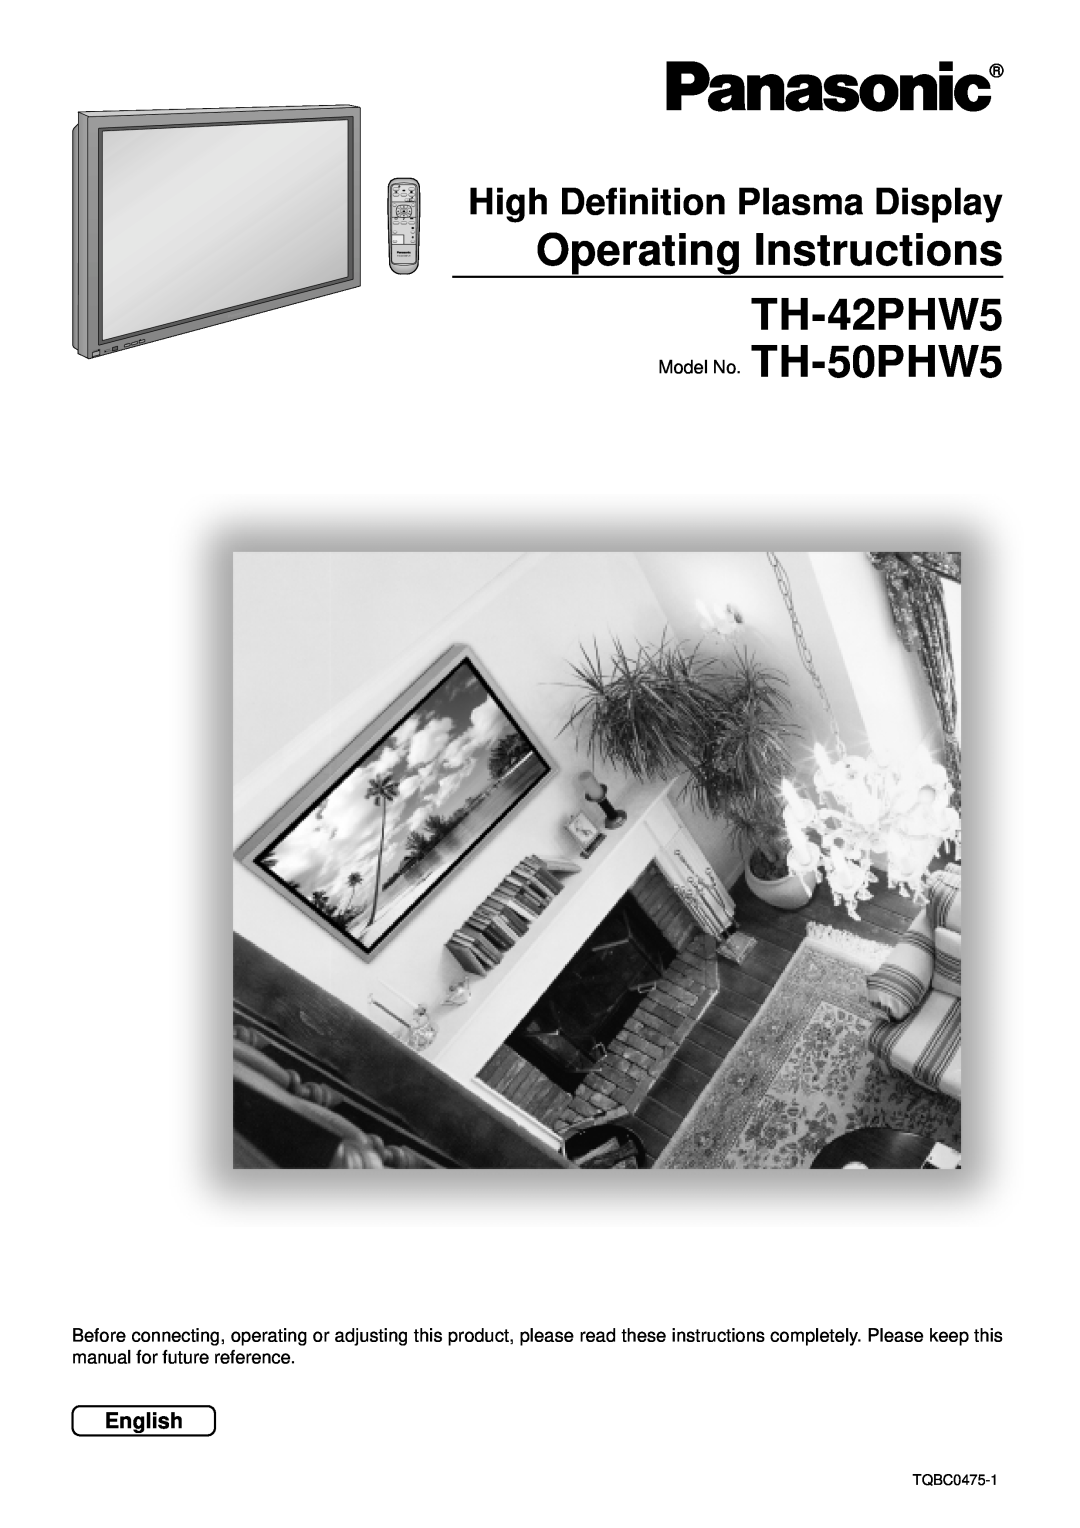 Panasonic TH-50PHW5 manual Operating Instructions TH-42PHW5, High Definition Plasma Display, English 